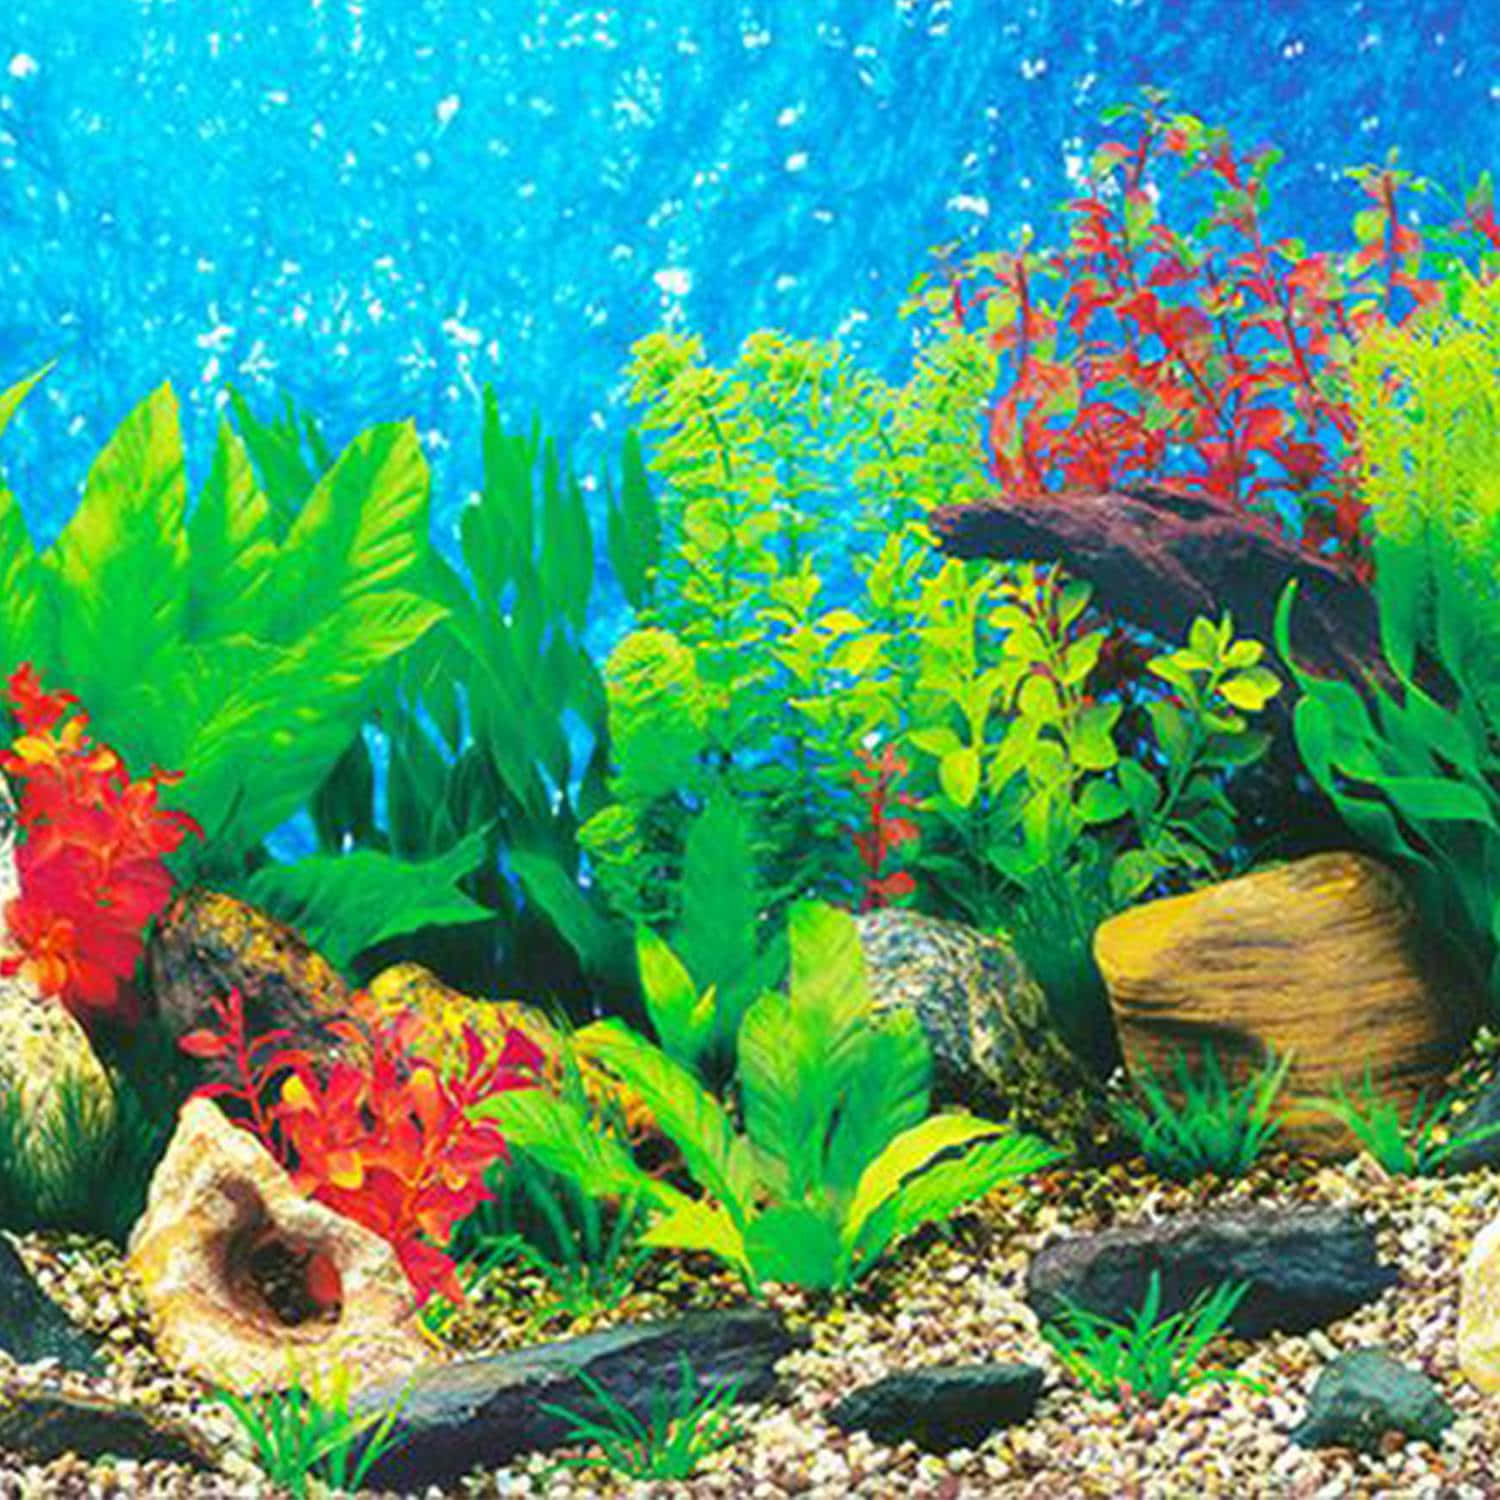 "Observe the Colorful Fish in Aquarium Tank" Wallpaper